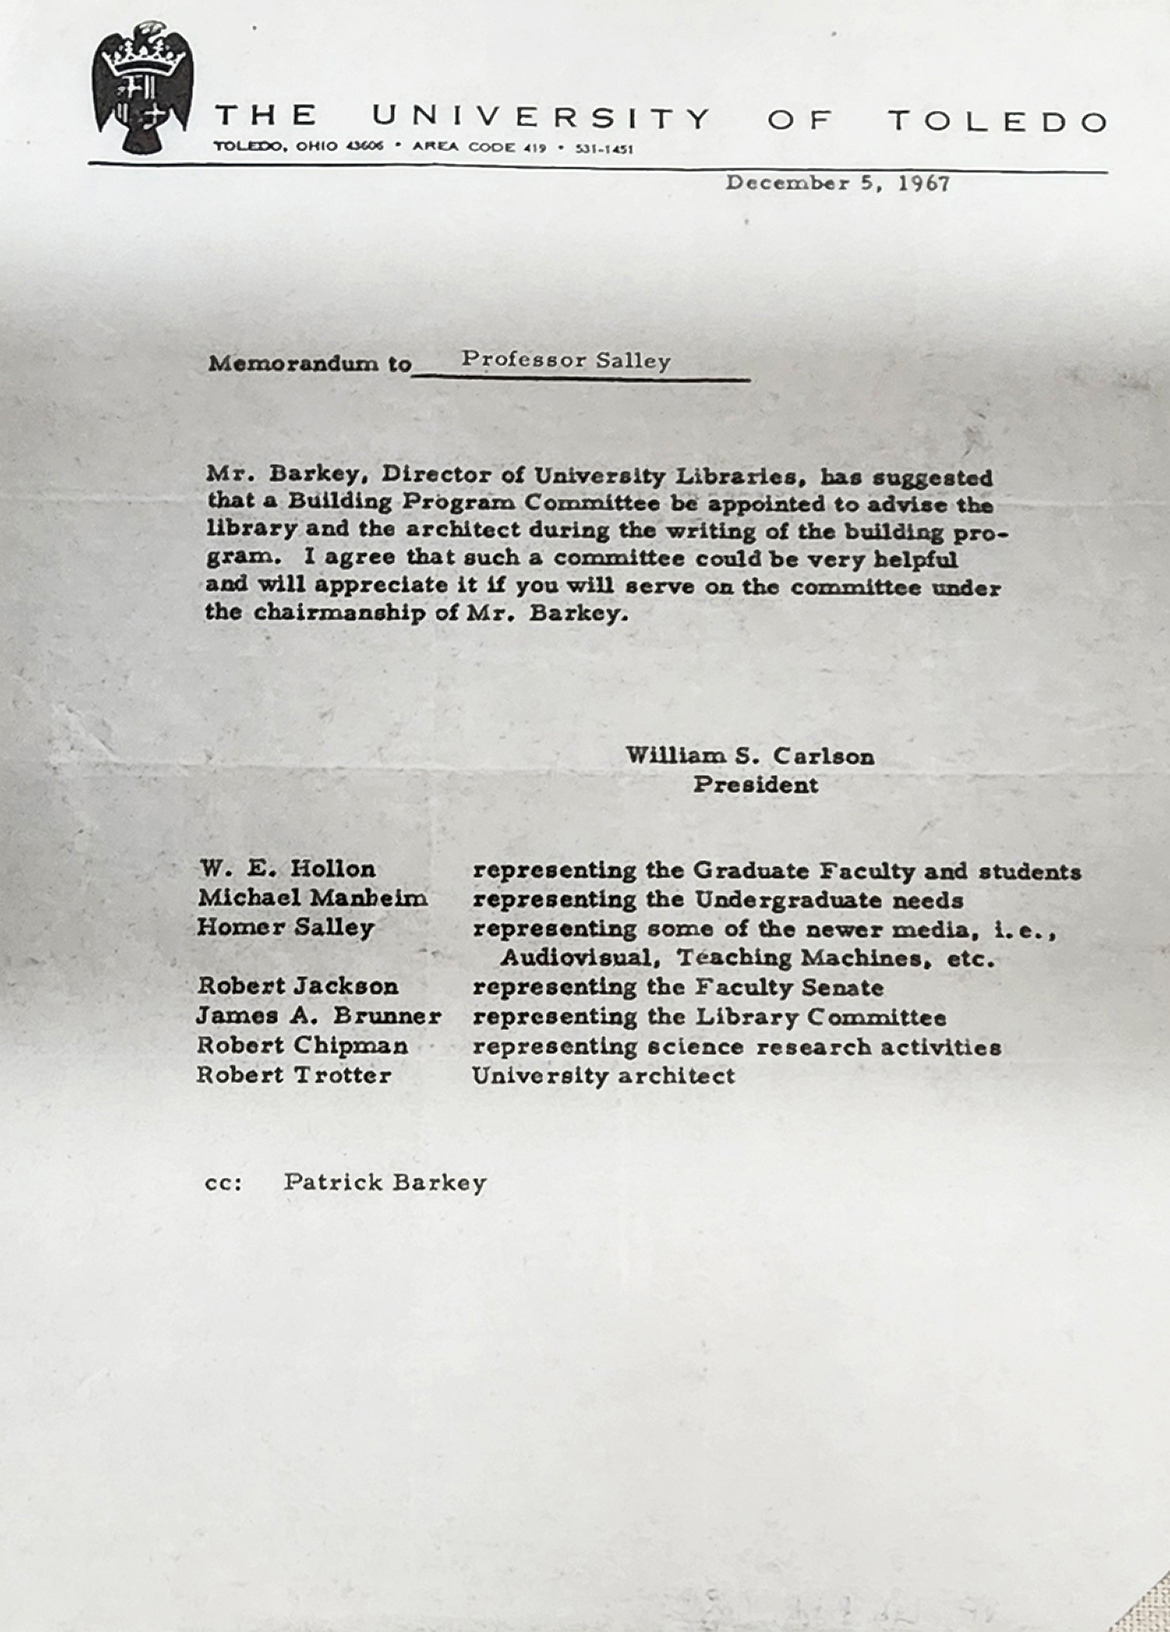 Memorandum to Professor Salley, December 5, 1967